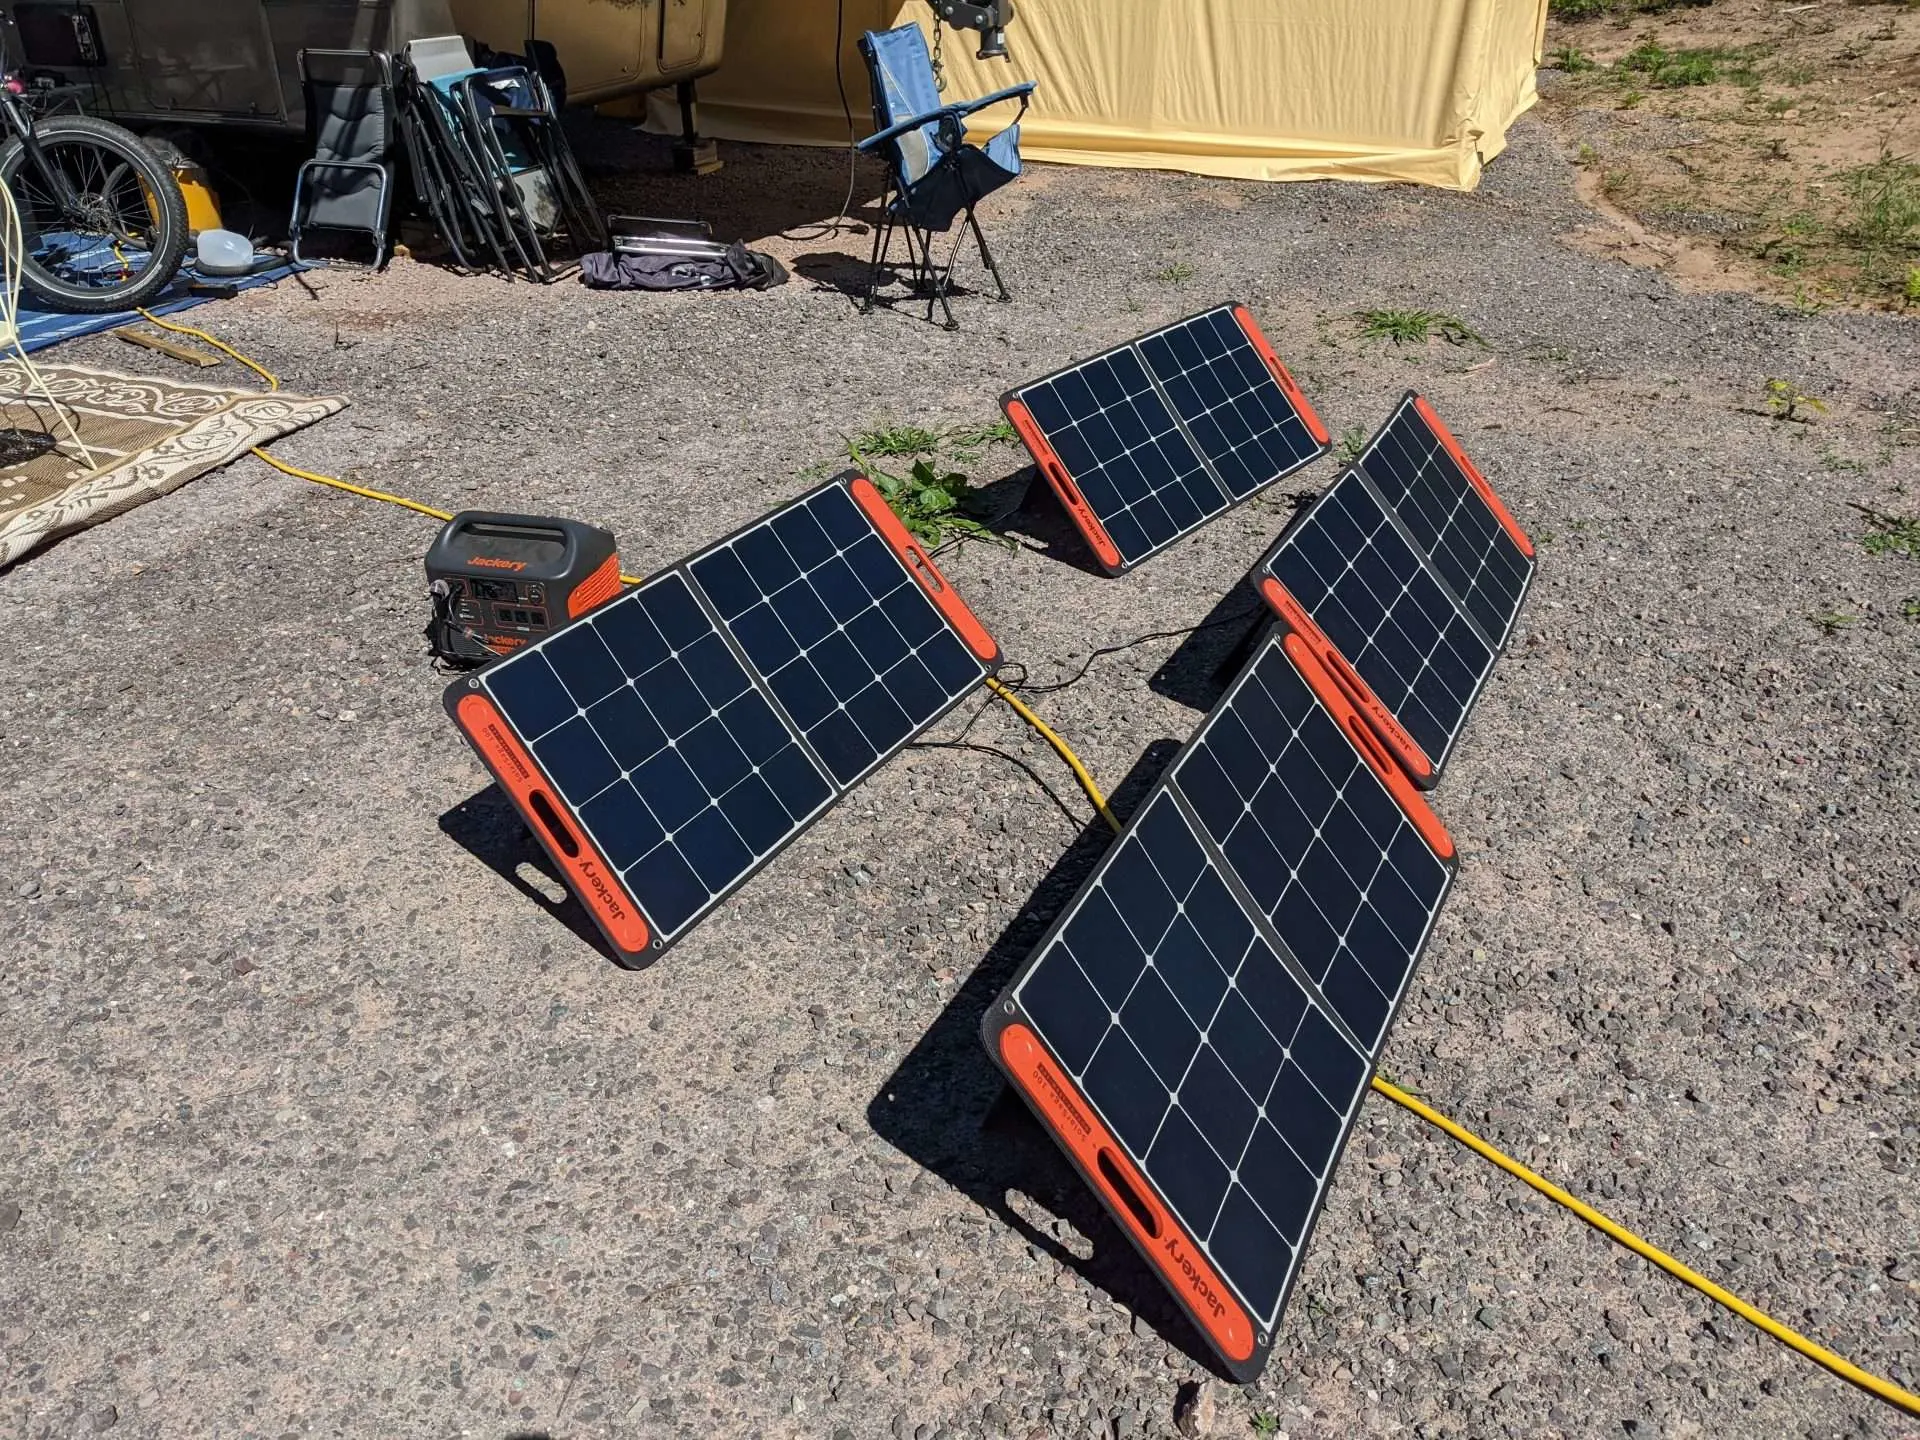 portable solar panels in the sun